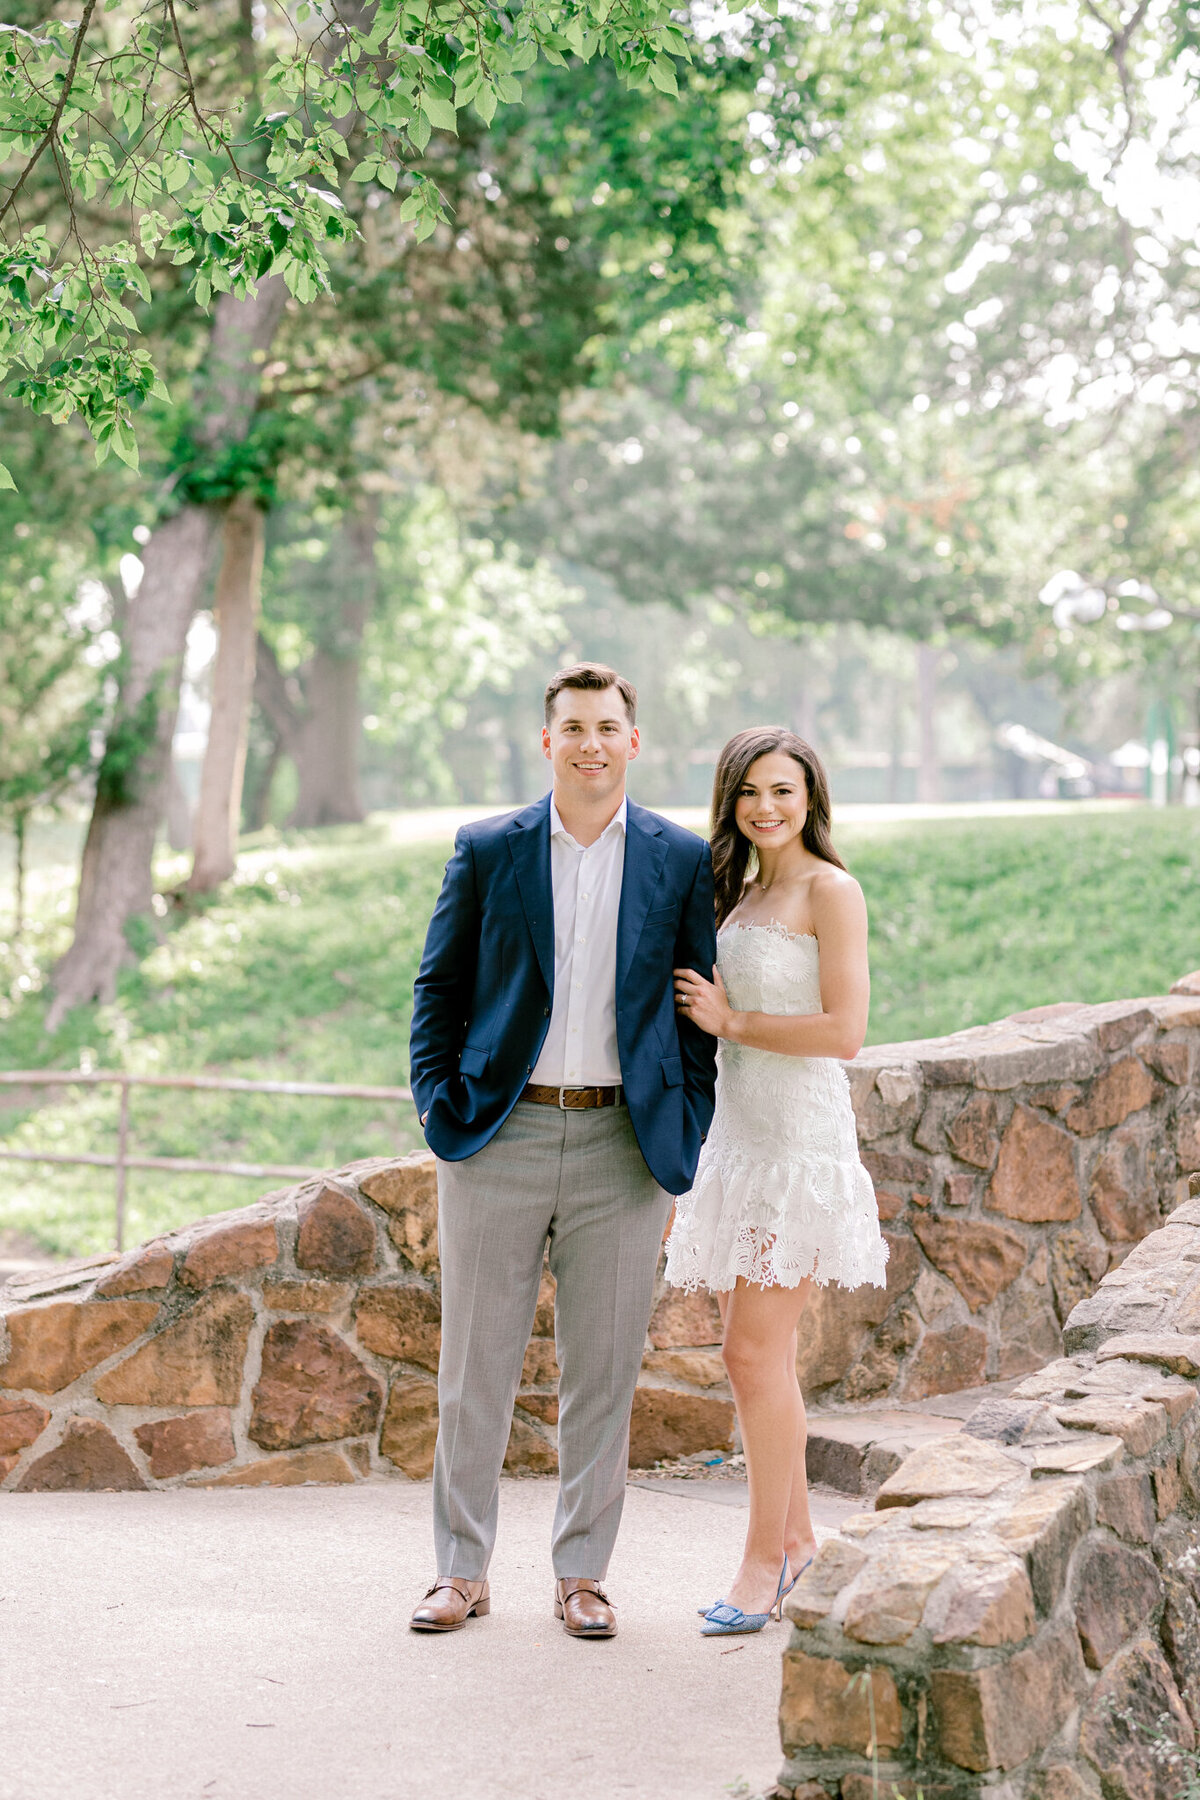 Samantha & Luke's Reverchon Park Engagement Session | Dallas Wedding Photographer | Sami Kathryn Photography-18